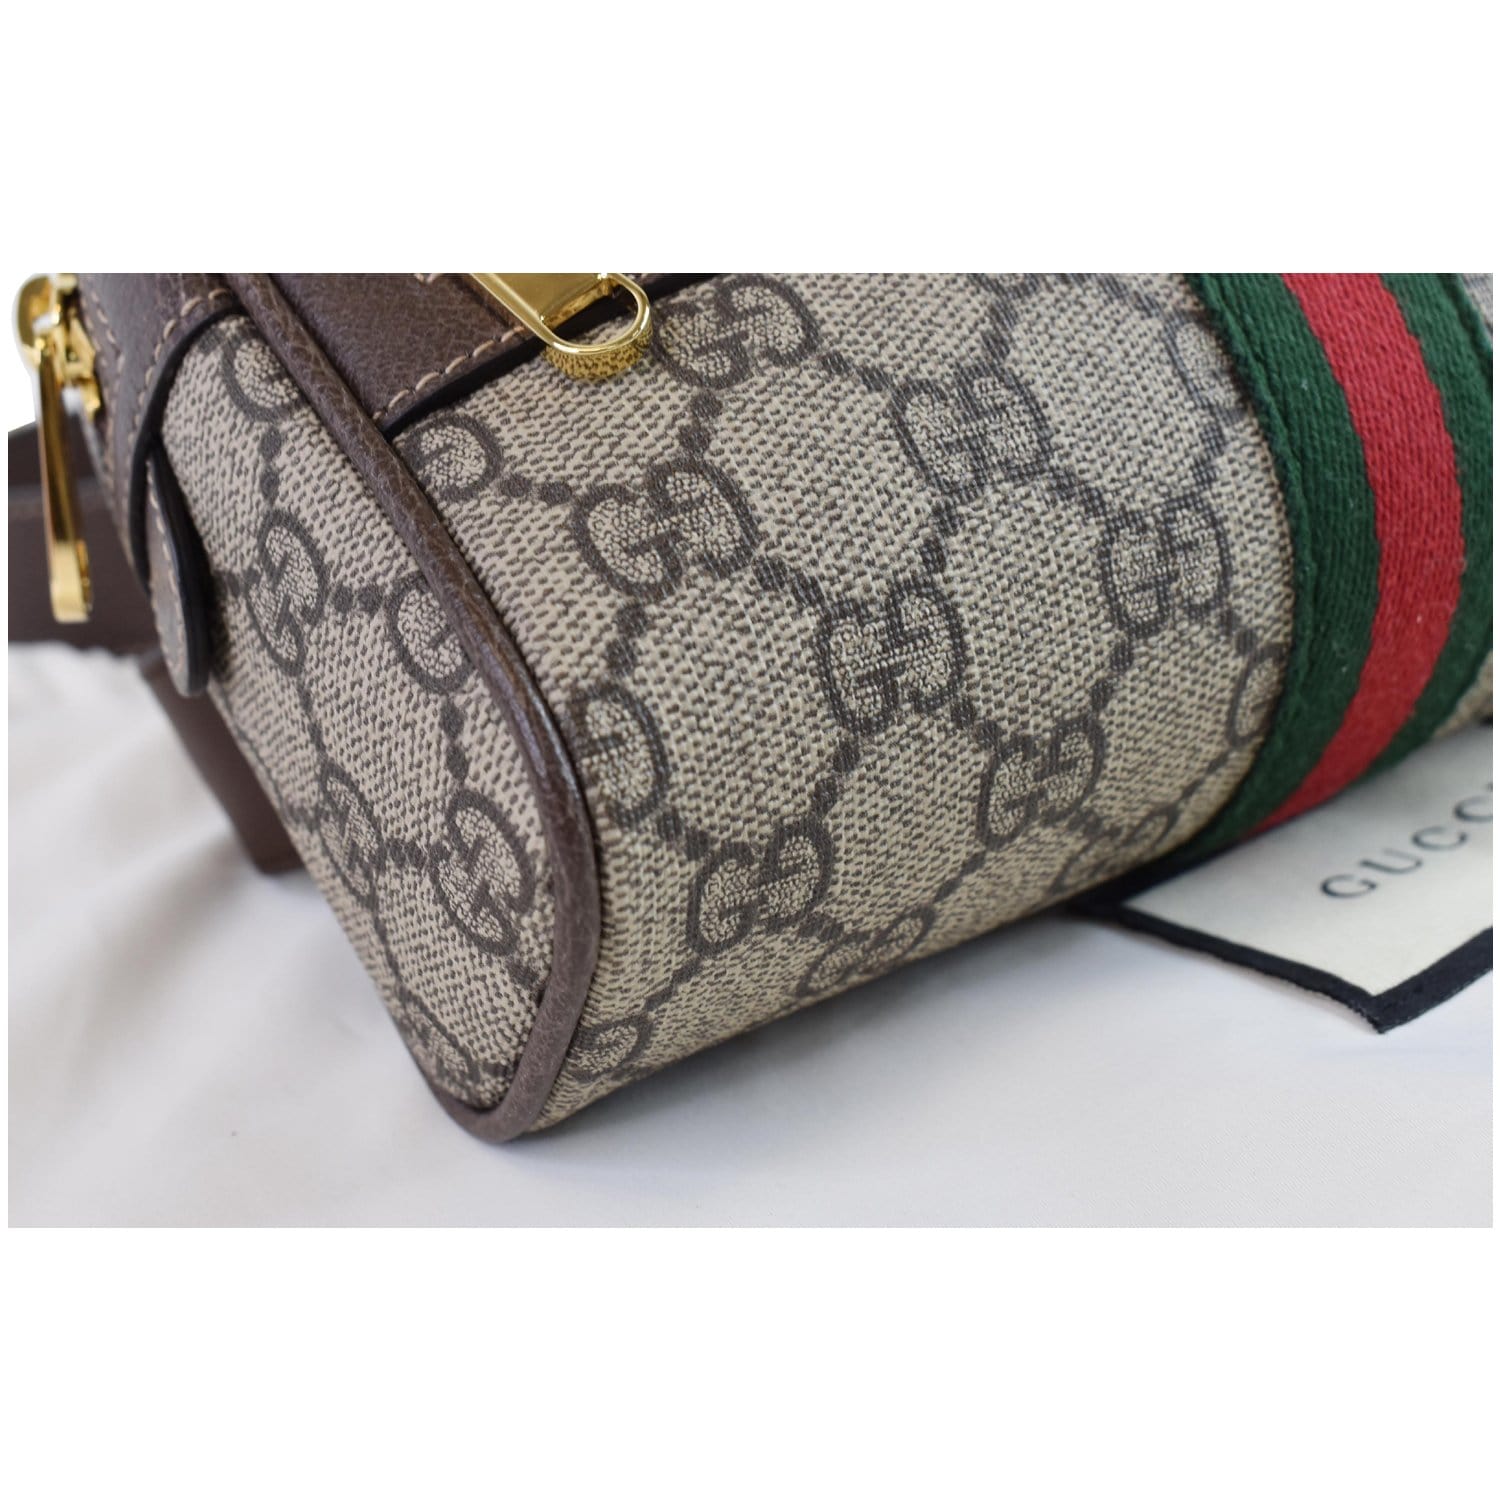 Gucci Ophidia GG Small Shoulder Bag - Farfetch